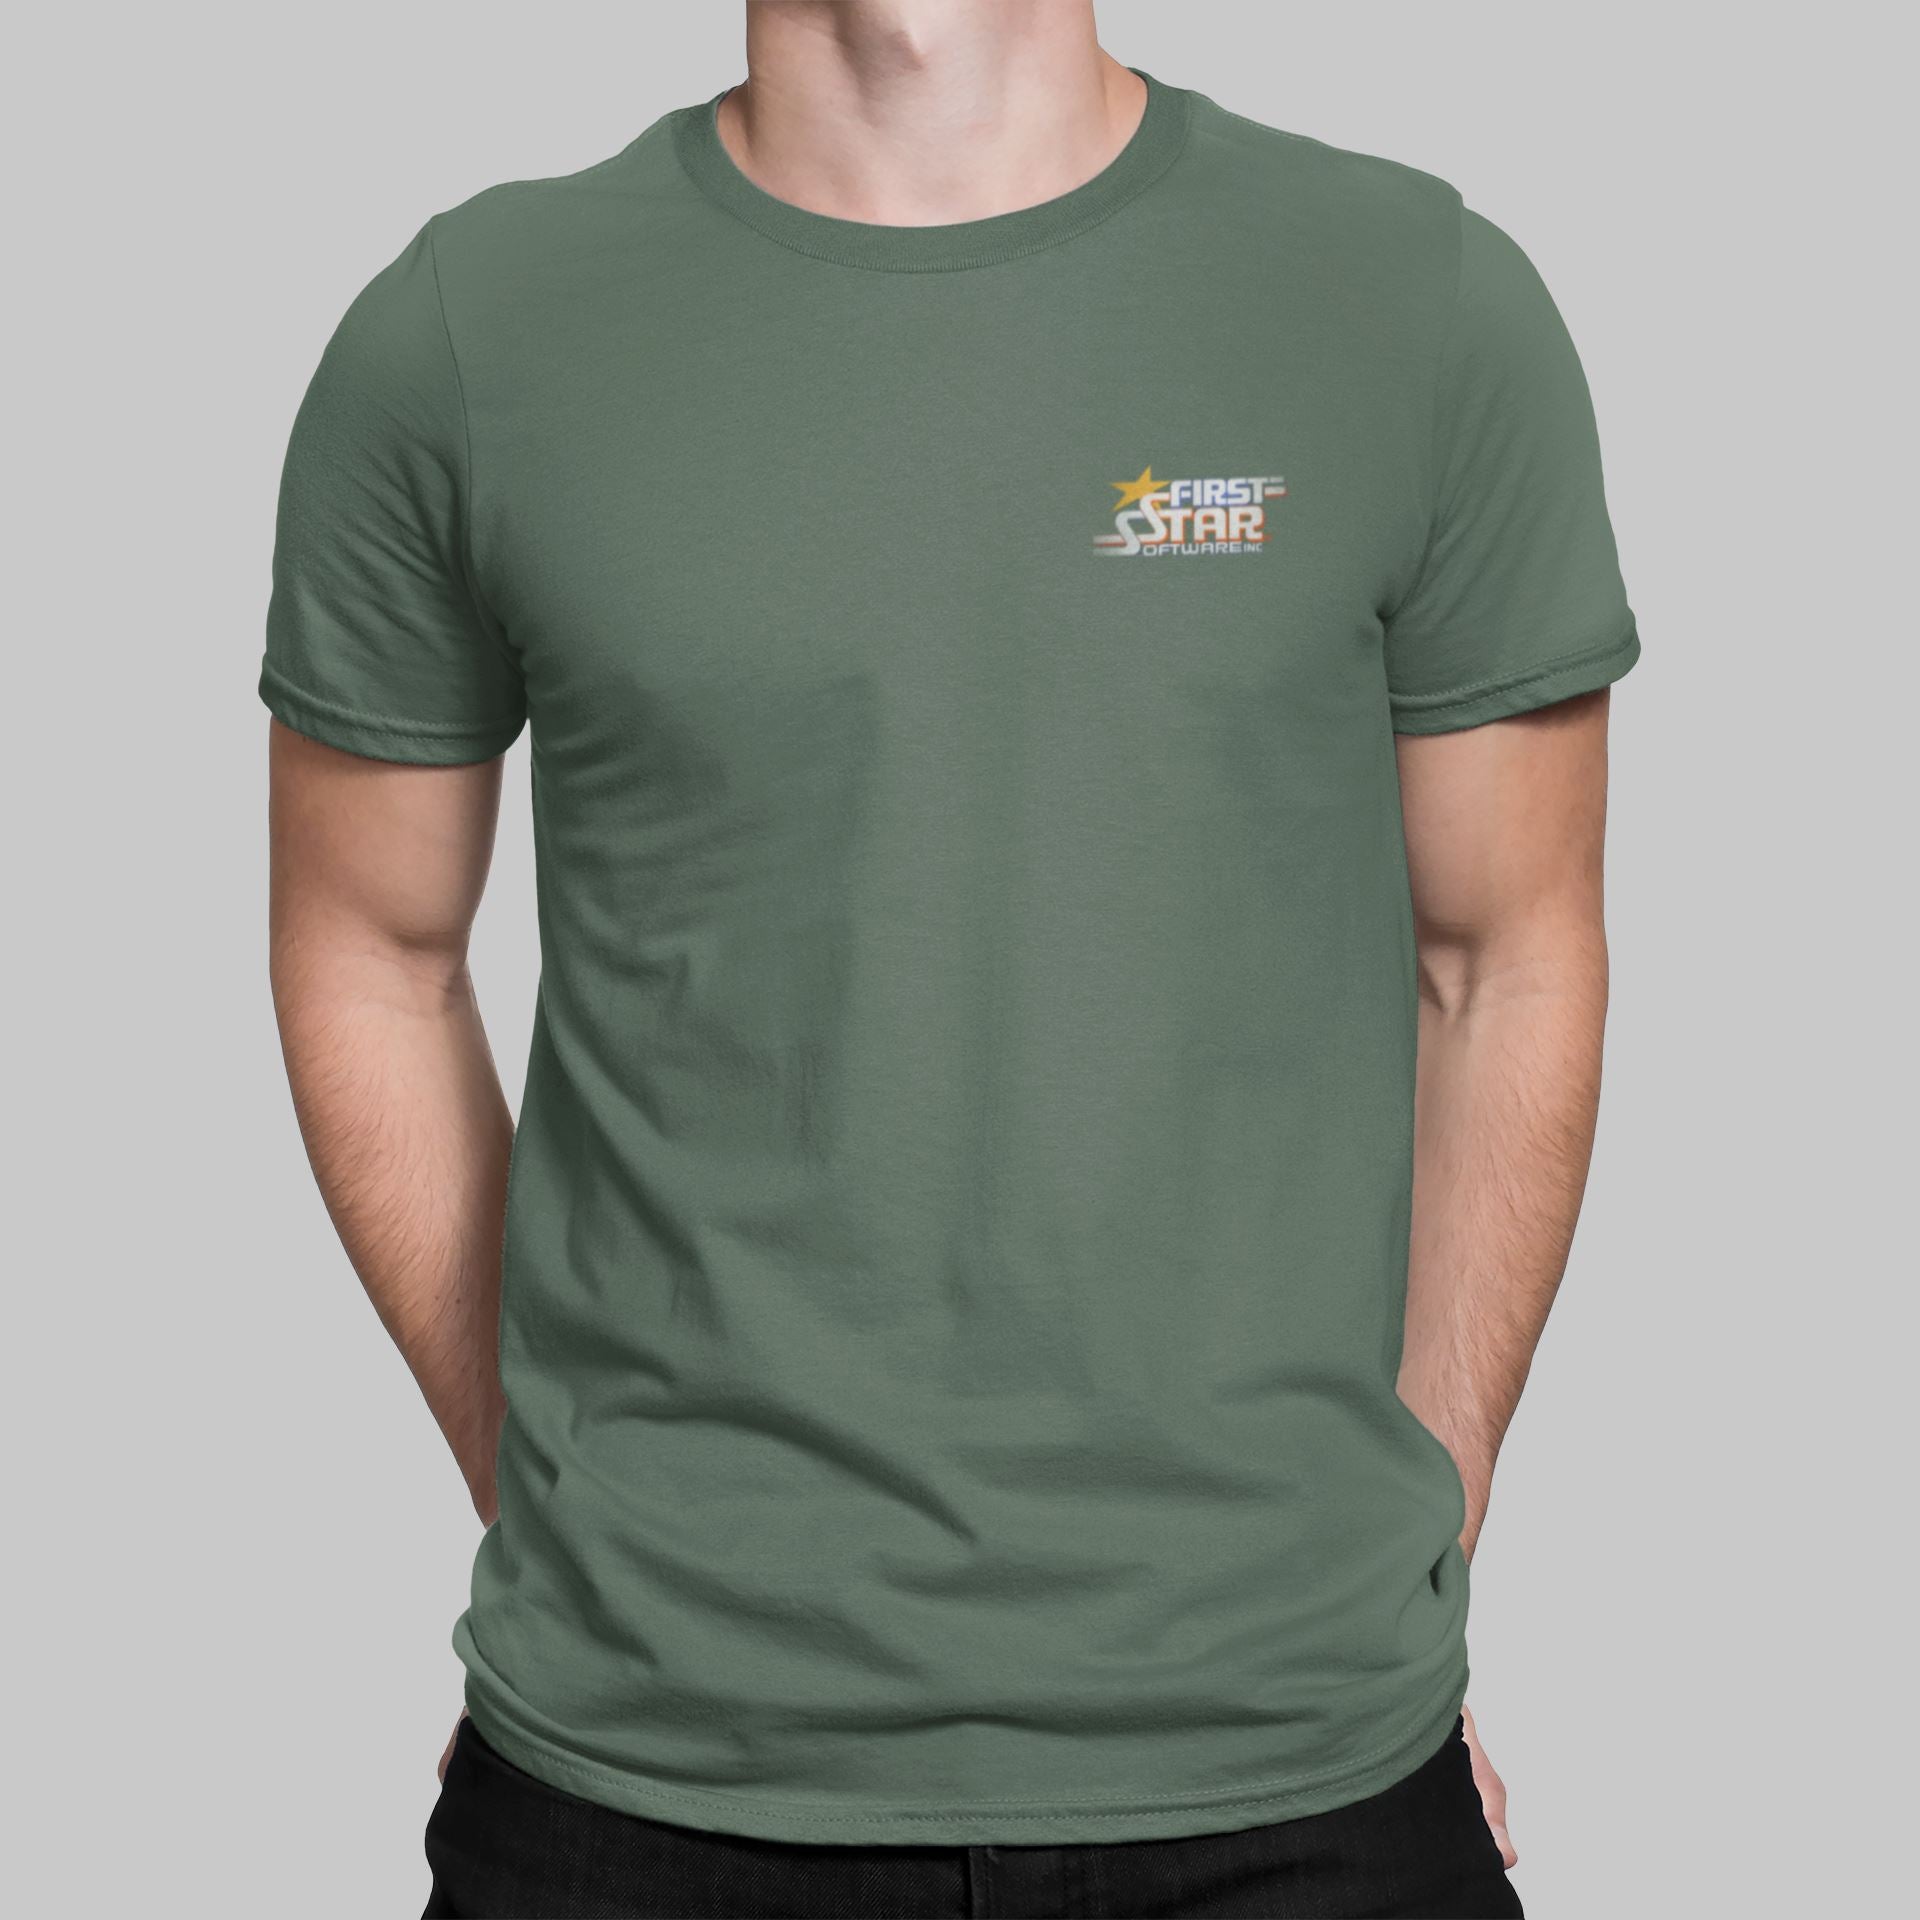 First Star Software Pocket Print Retro Gaming T-Shirt T-Shirt Seven Squared Small 34-36" Military Green 